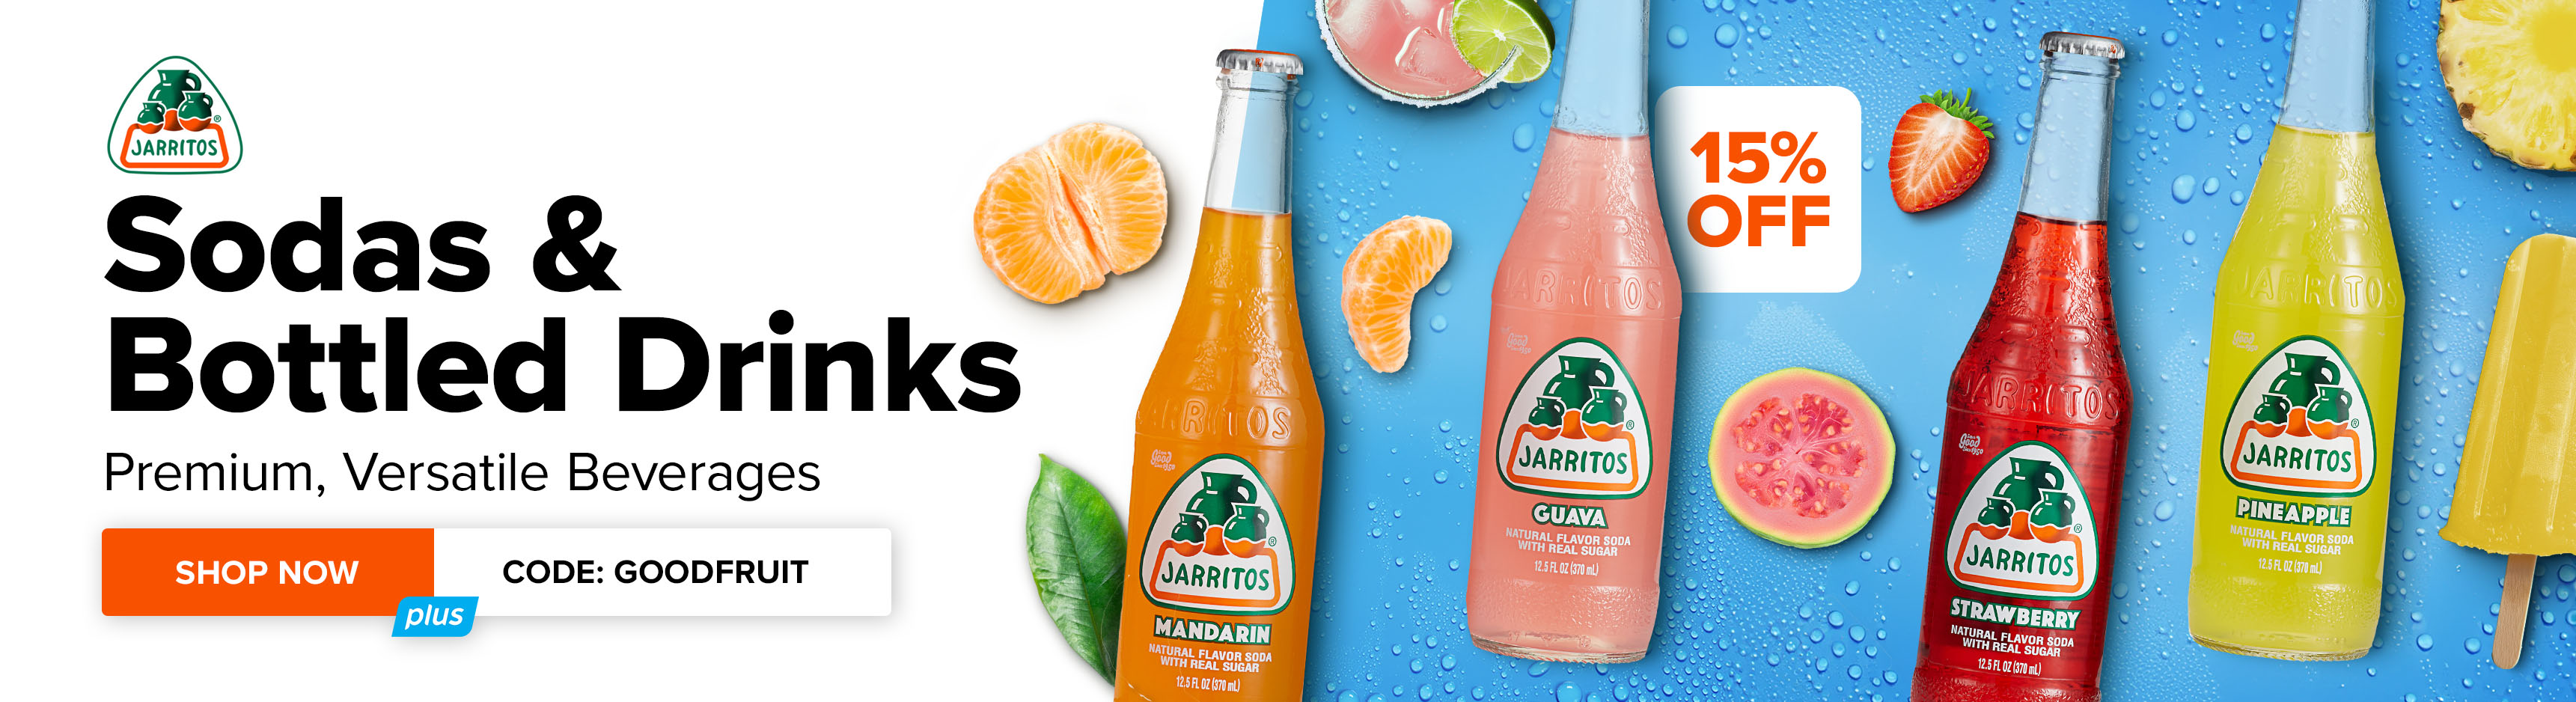 Save 15% on Jarritos sodas and bottled drinks